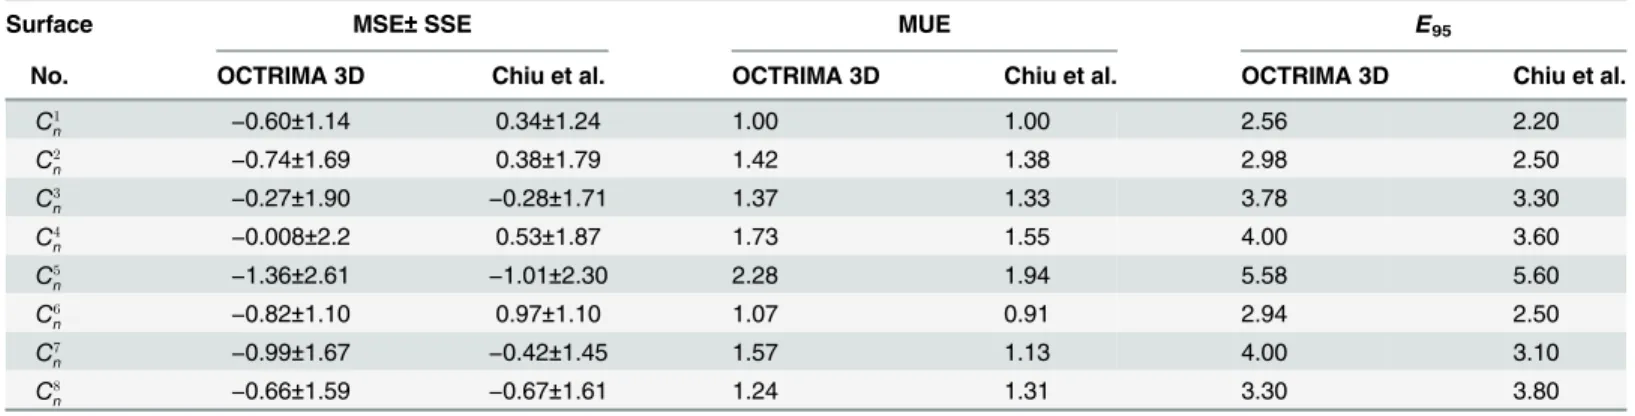 Table 3. Comparison results between OCTRIMA 3D and the algorithm by Chiu et al. on Bioptigen OCT images